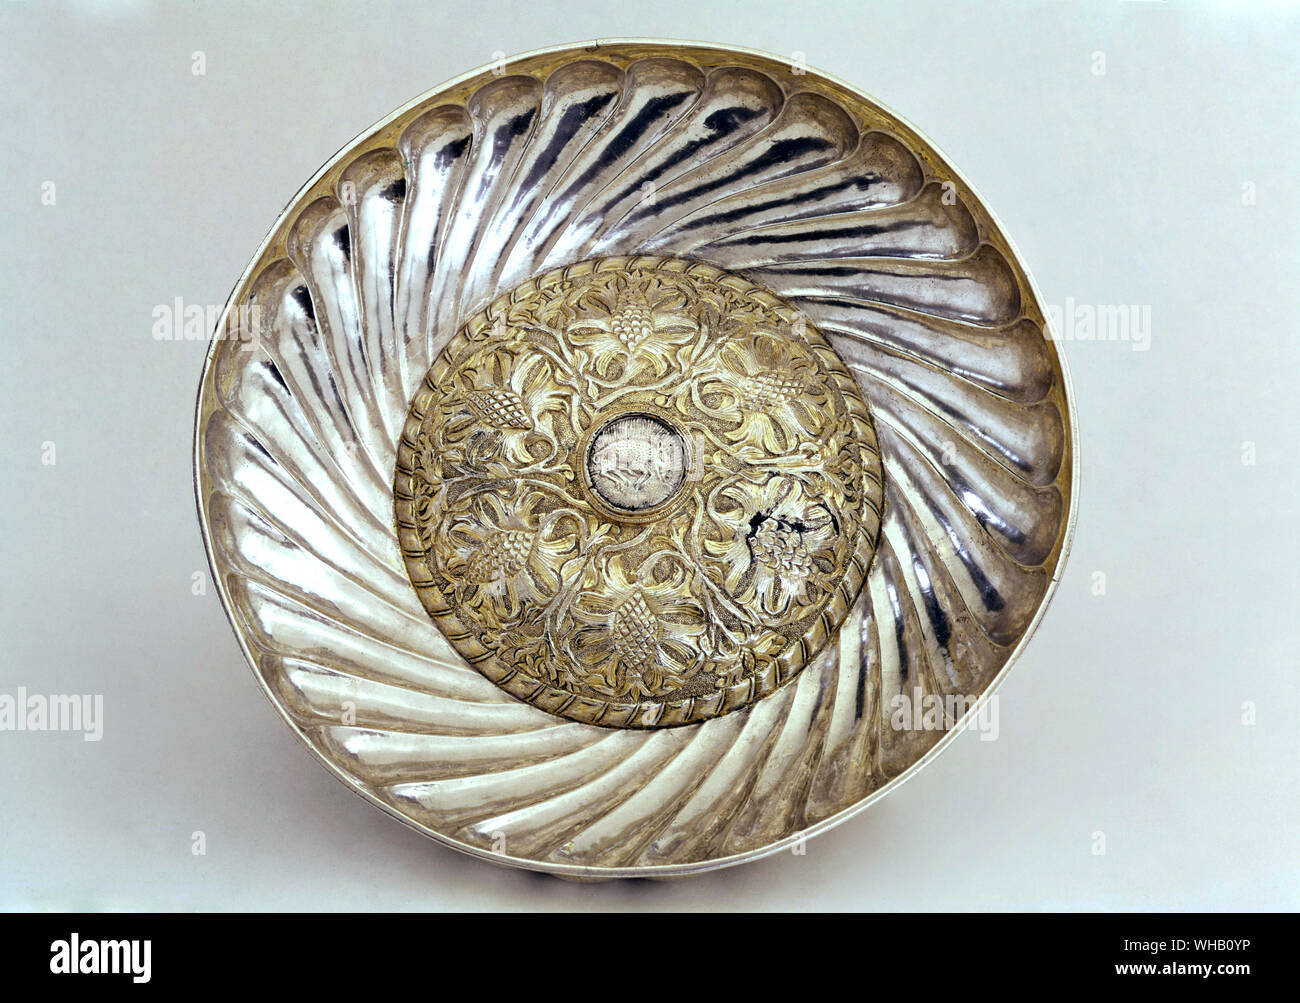 Silver and parcel-gilt bowl, Venice, c.1500. Victoria & Albert Museum, London. Stock Photo